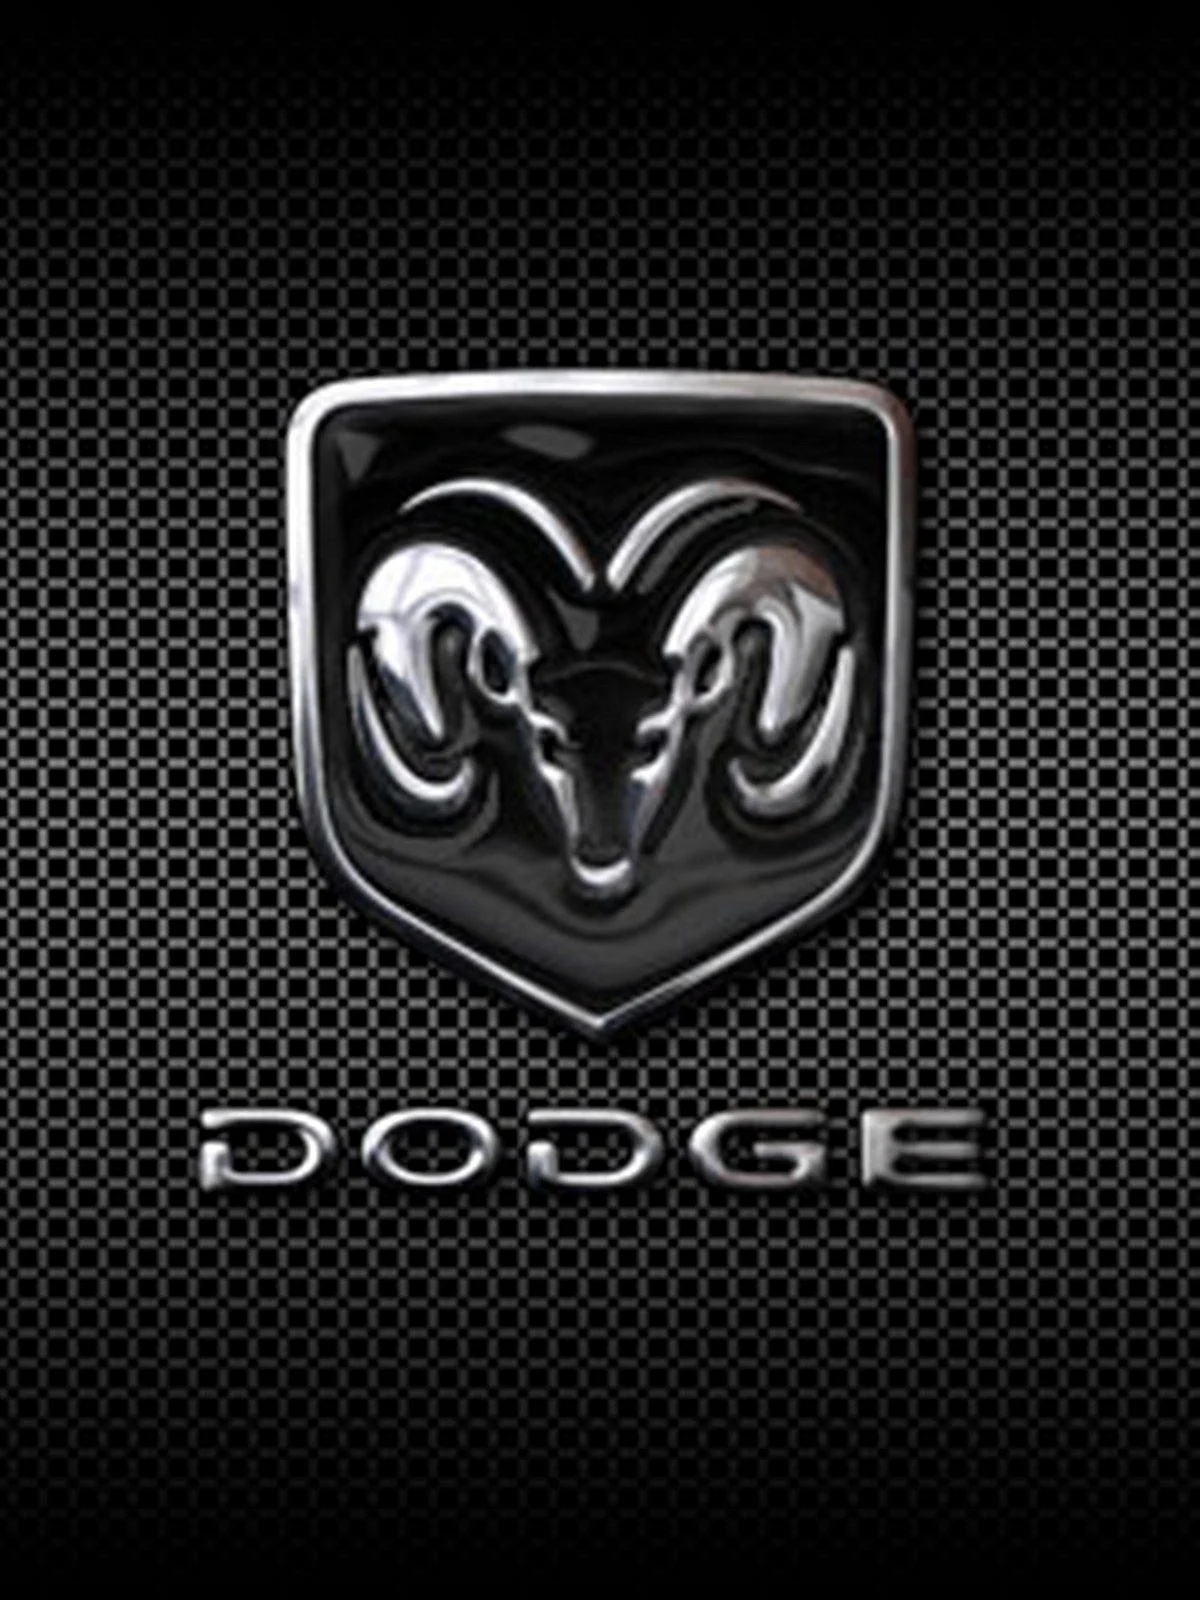 История о логотипе компании Dodge